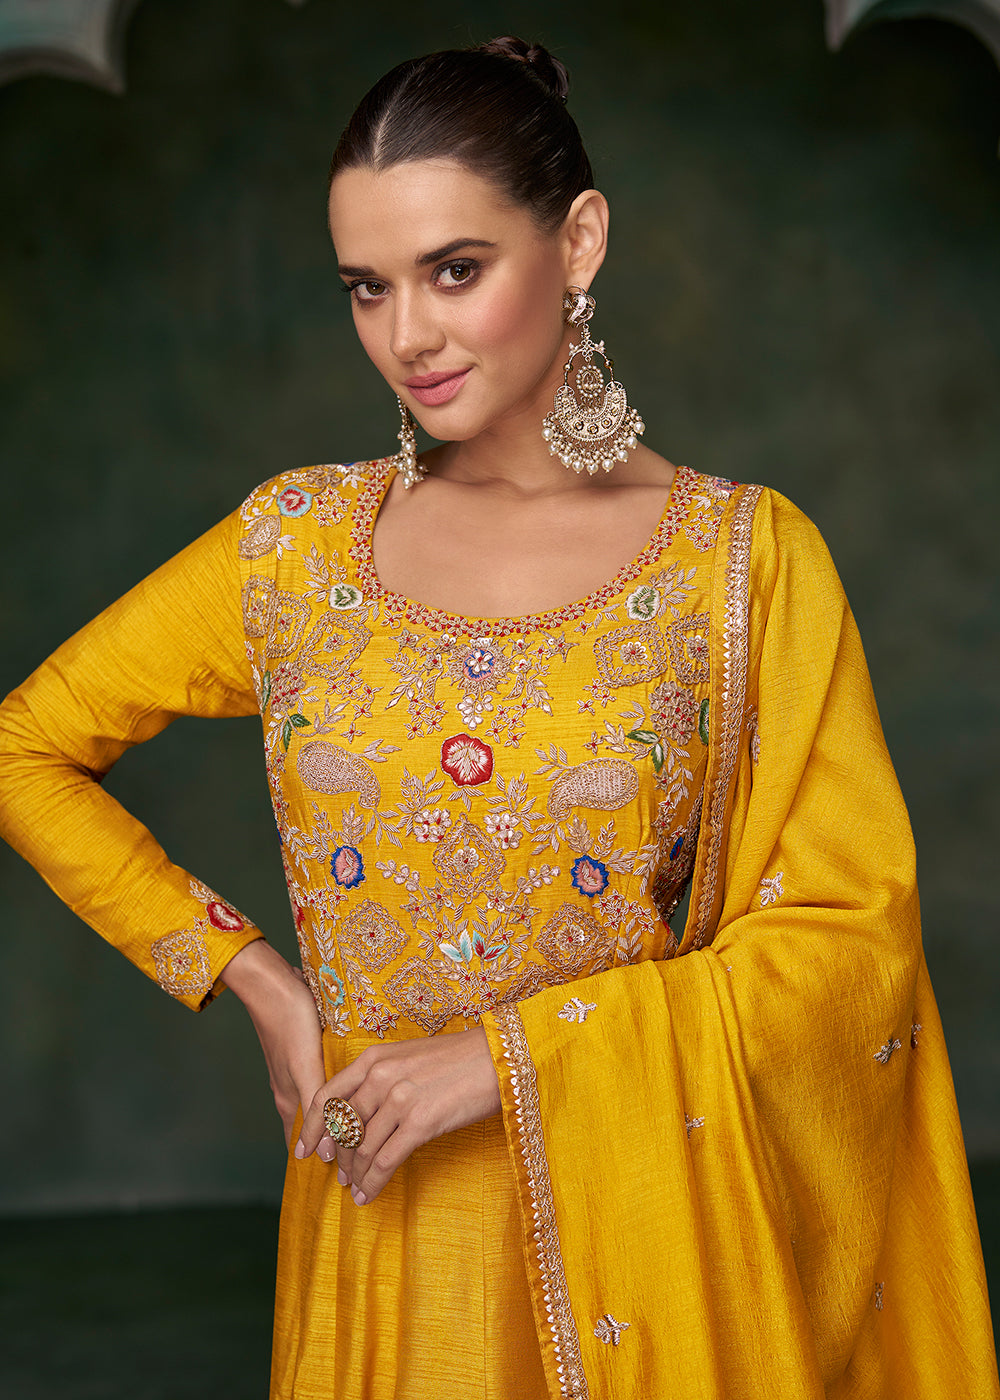 Buy Now Haldi Wear Mustard Premium Silk Indian Anarkali Gown Online in USA, UK, Australia, Canada & Worldwide at Empress Clothing.